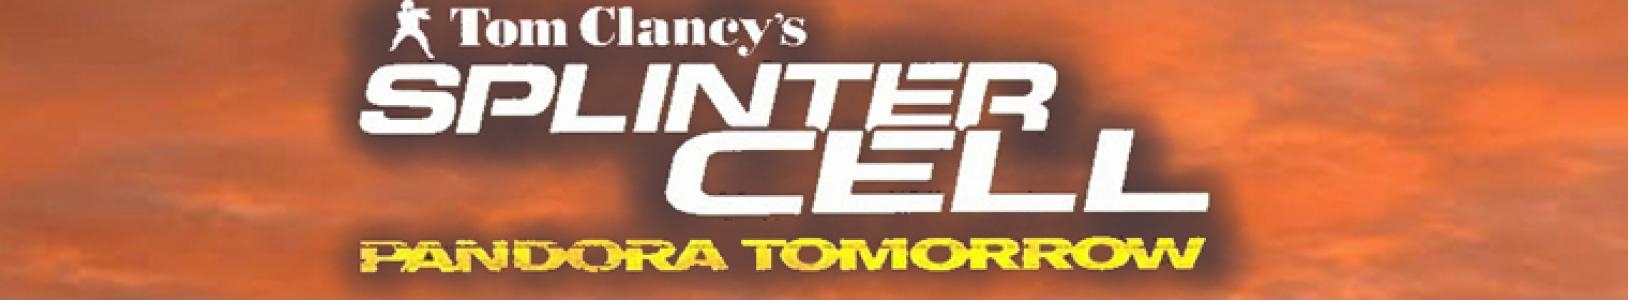 Tom Clancy's Splinter Cell: Pandora Tomorrow banner